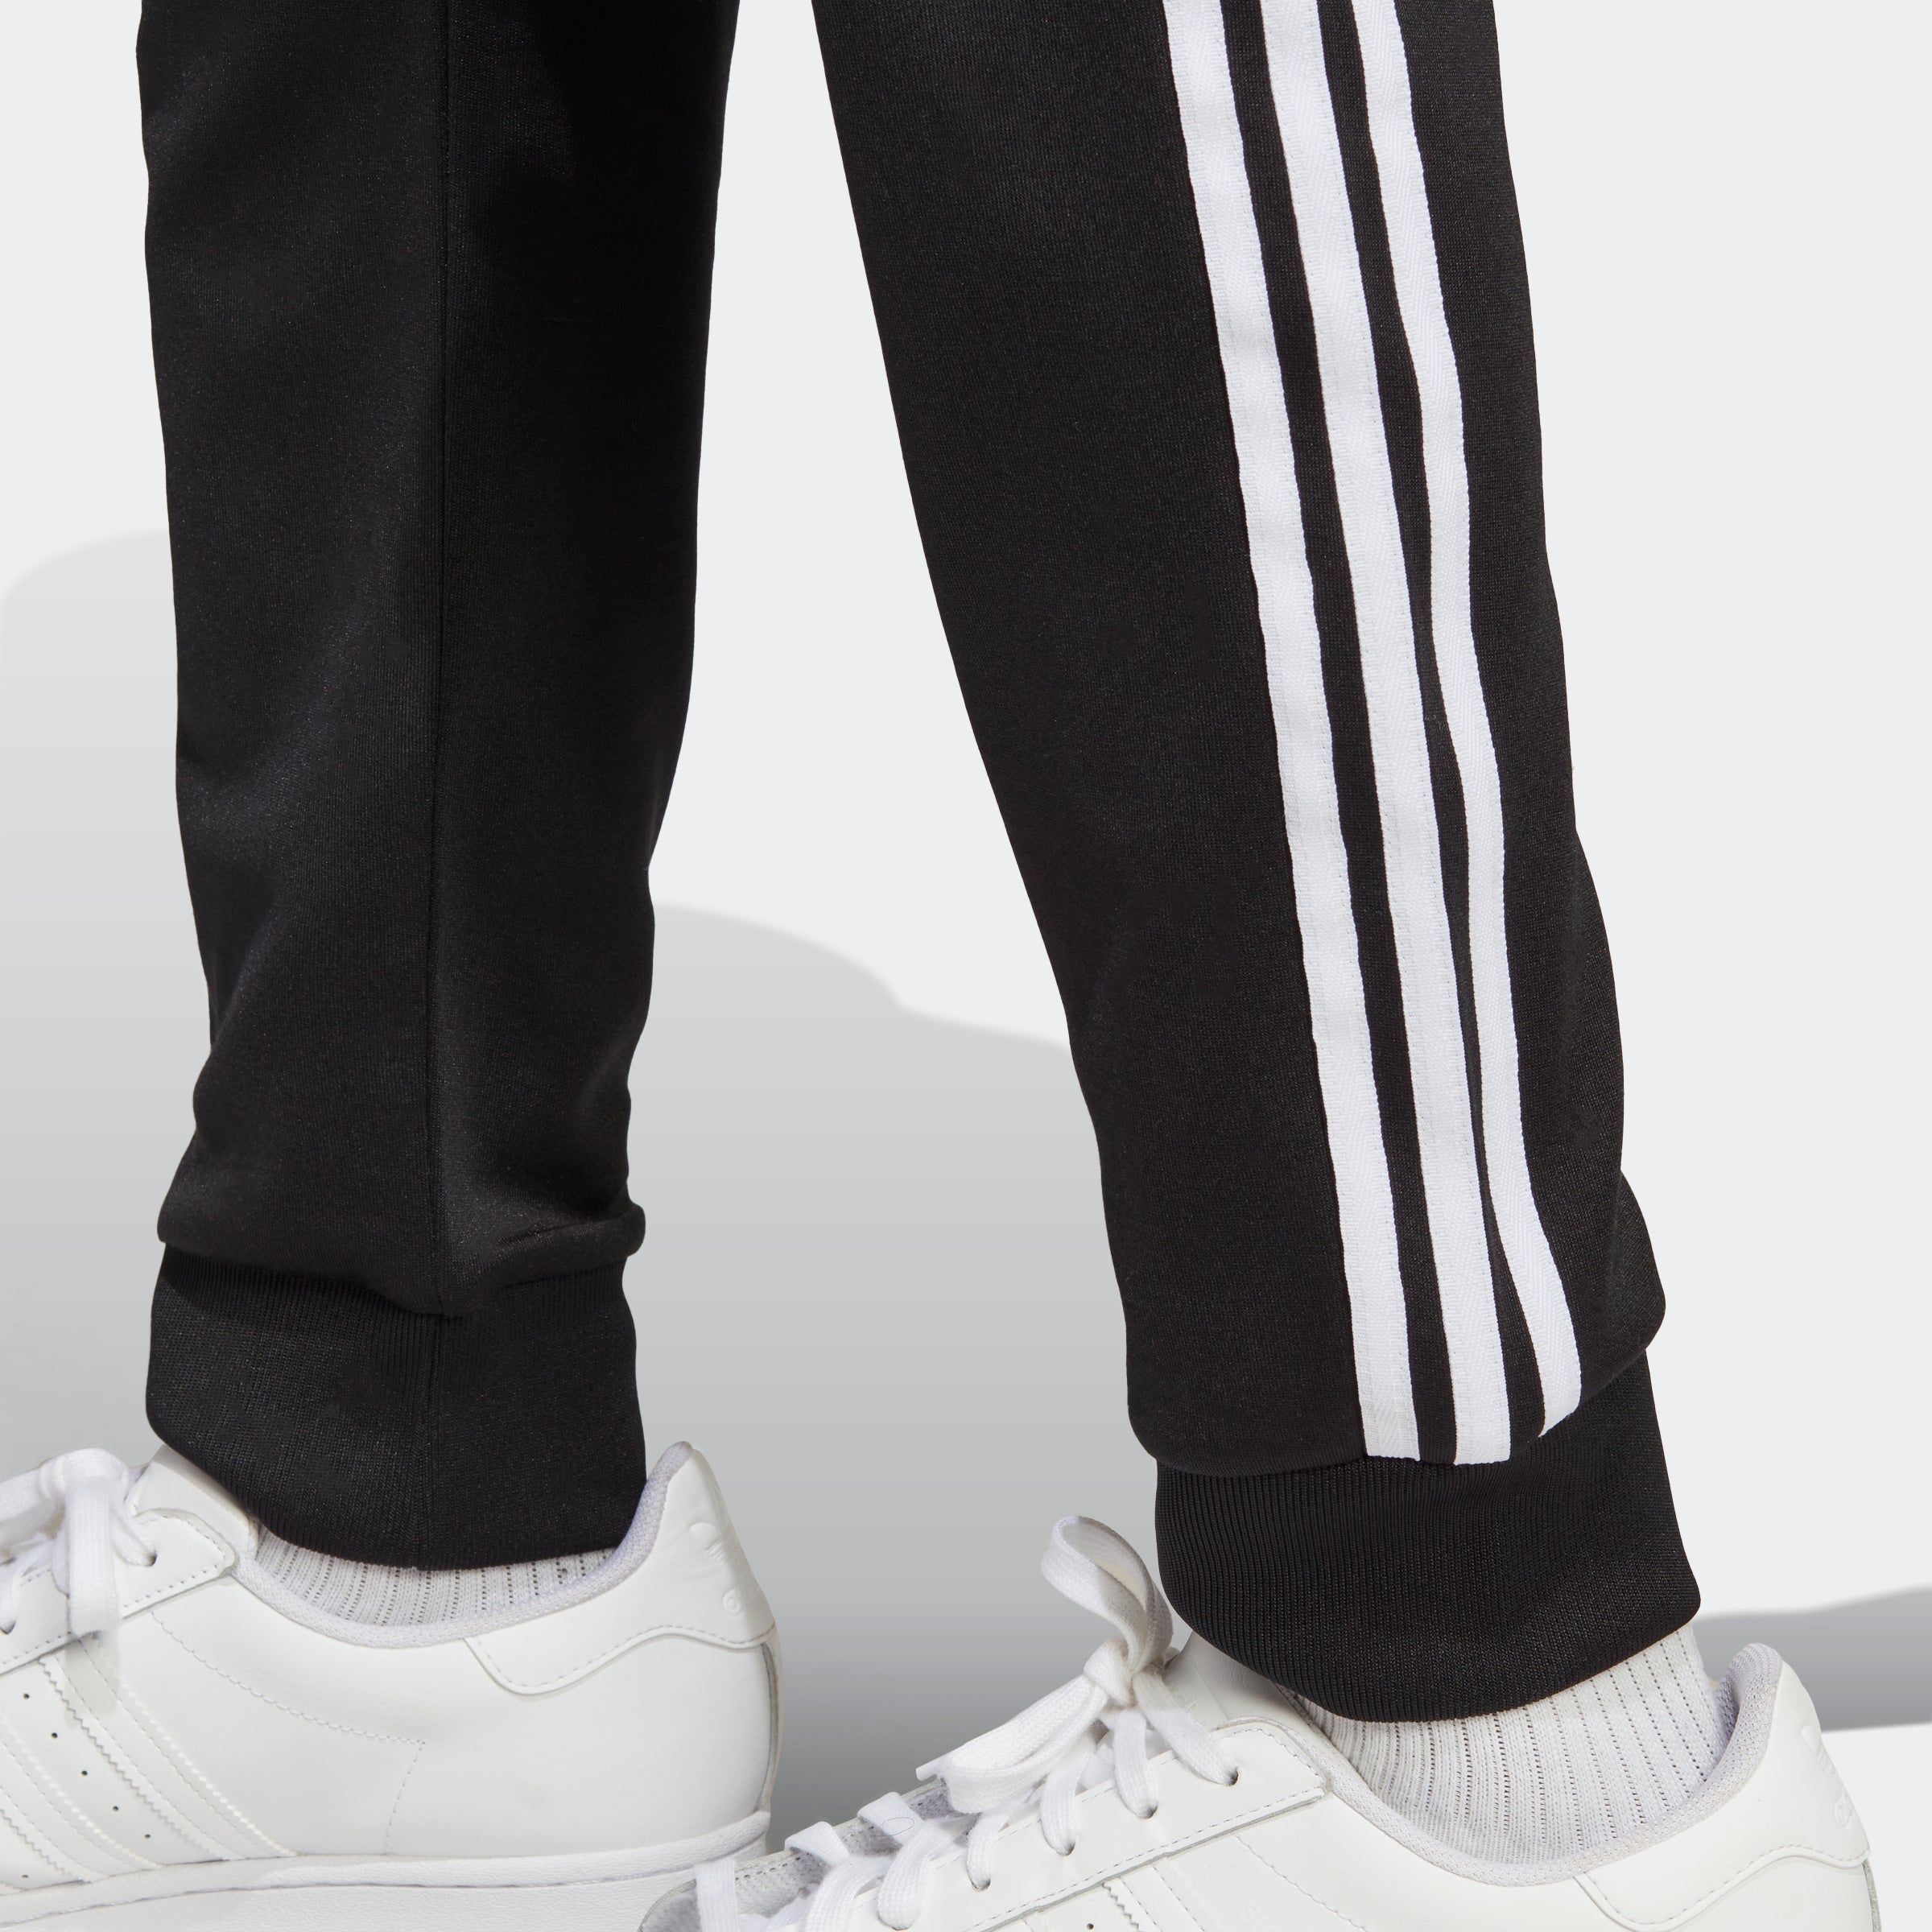 Buy Adidas Originals SST TRACK PANTS - Black